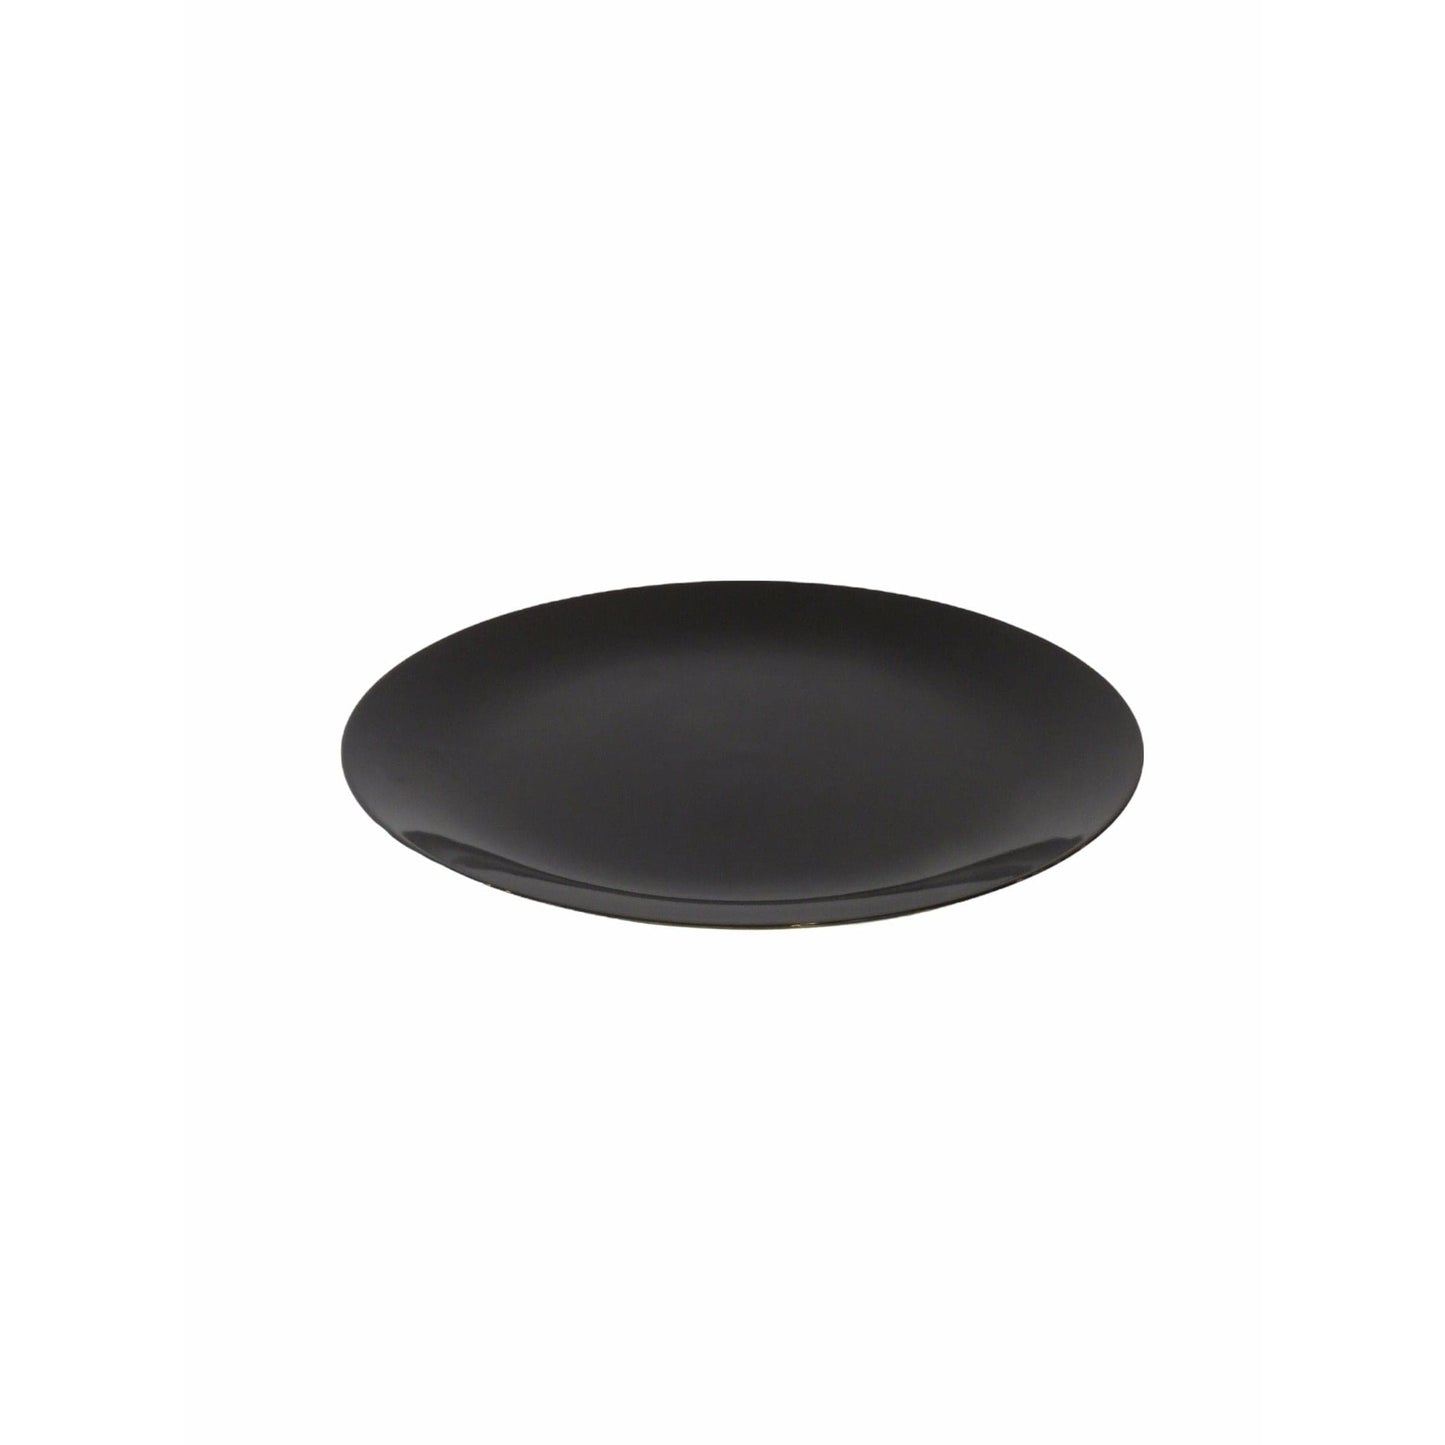 Ann Demeulemeester Home Plates 24 centimeters / Black / Porcelain Ann Demeulemeester for Serax 24 cm plates (set of two)